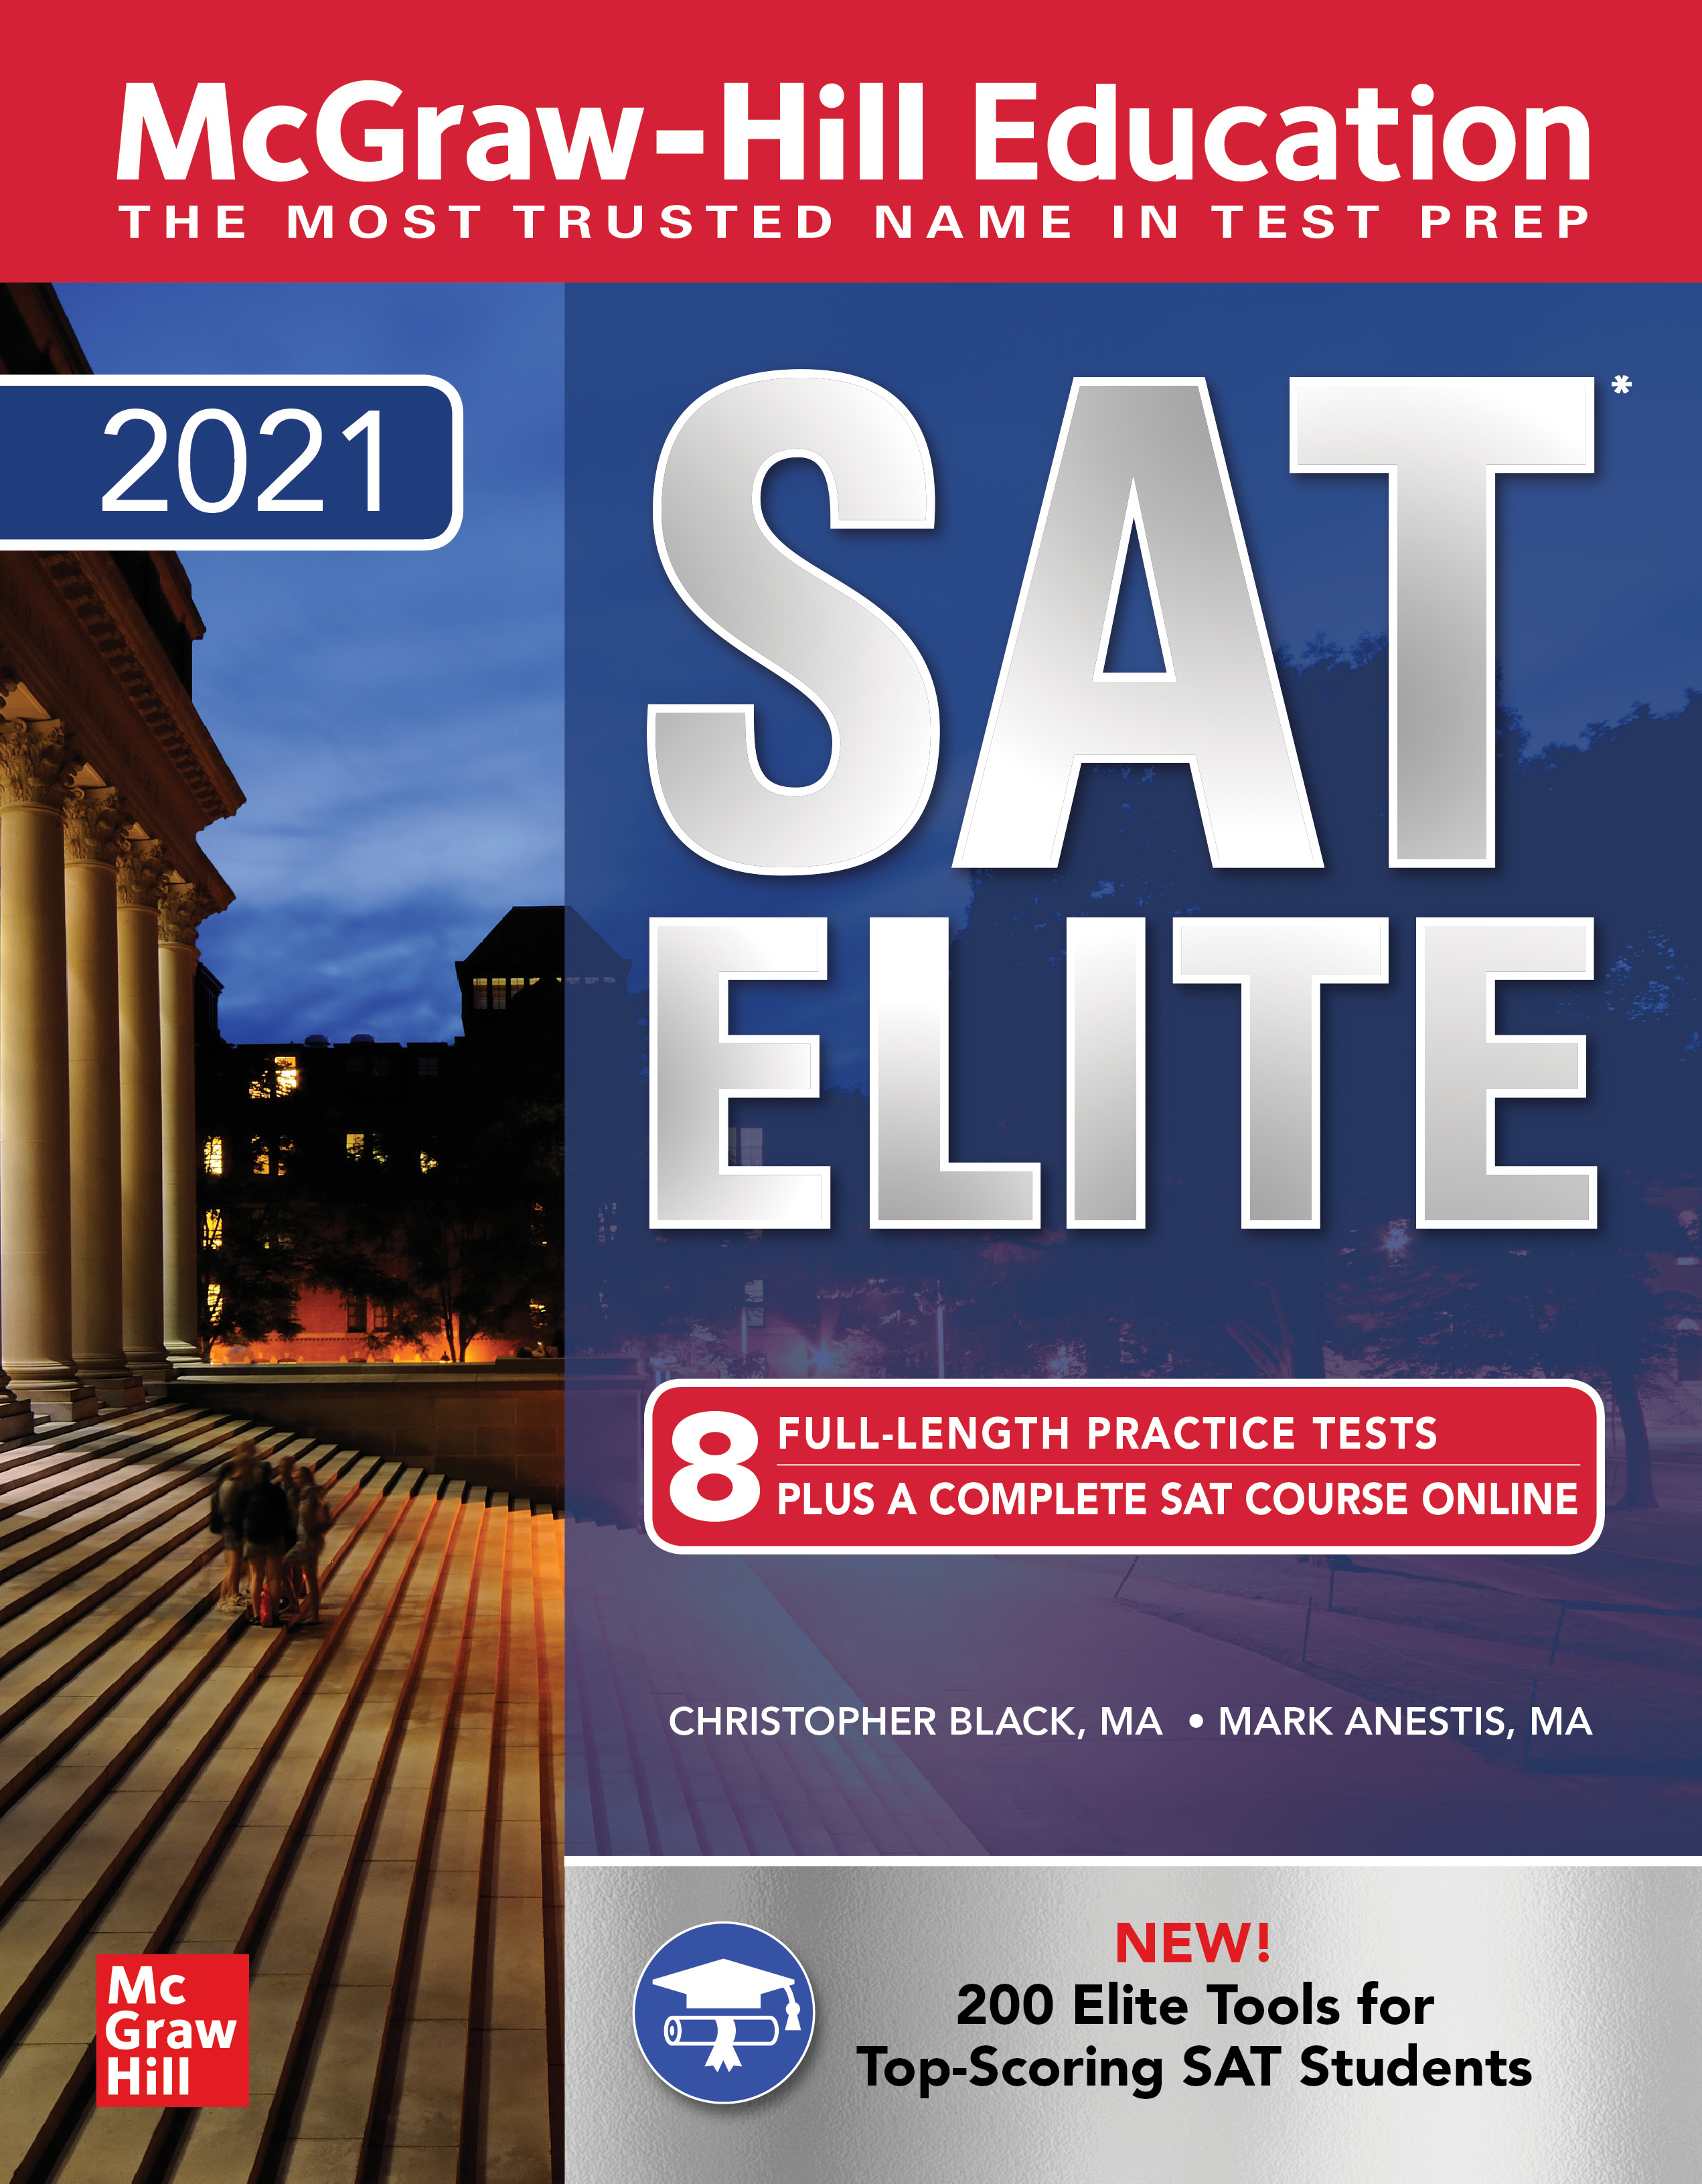 McGraw-Hill Education SAT Elite 2021